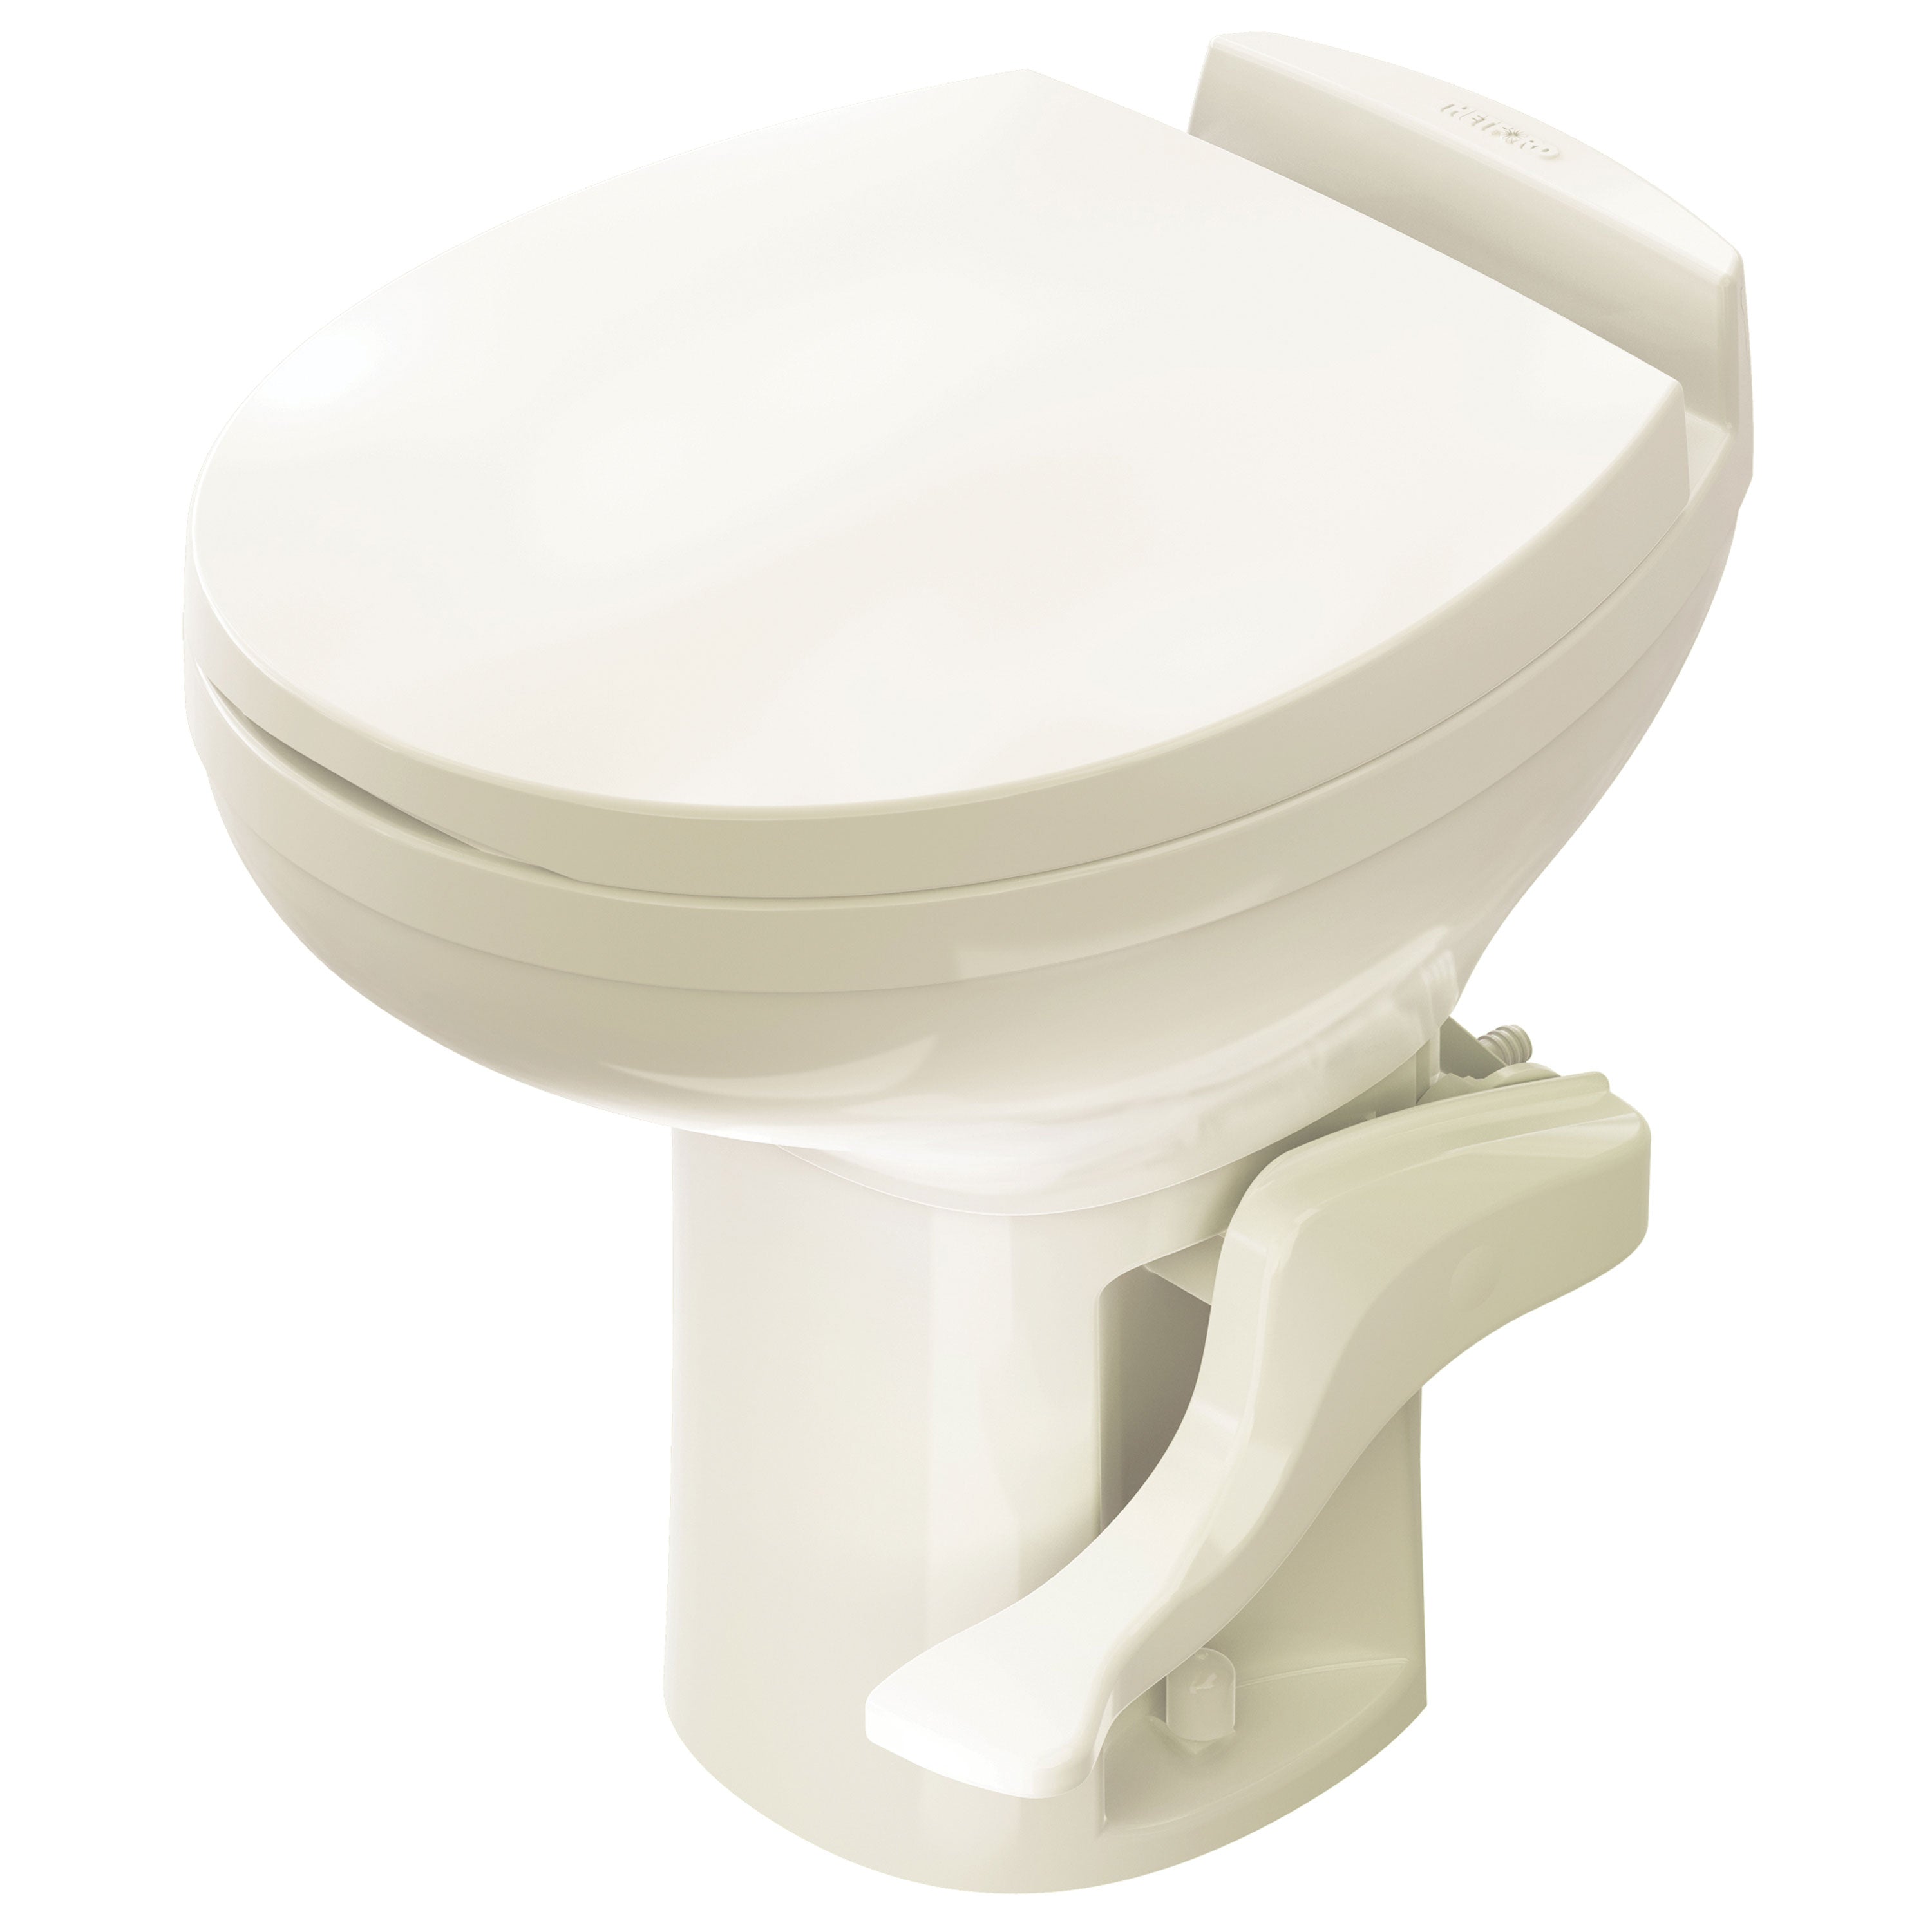 Thetford 42175 Aqua-Magic Residence RV Toilet with Water Saver - High Profile, Bone